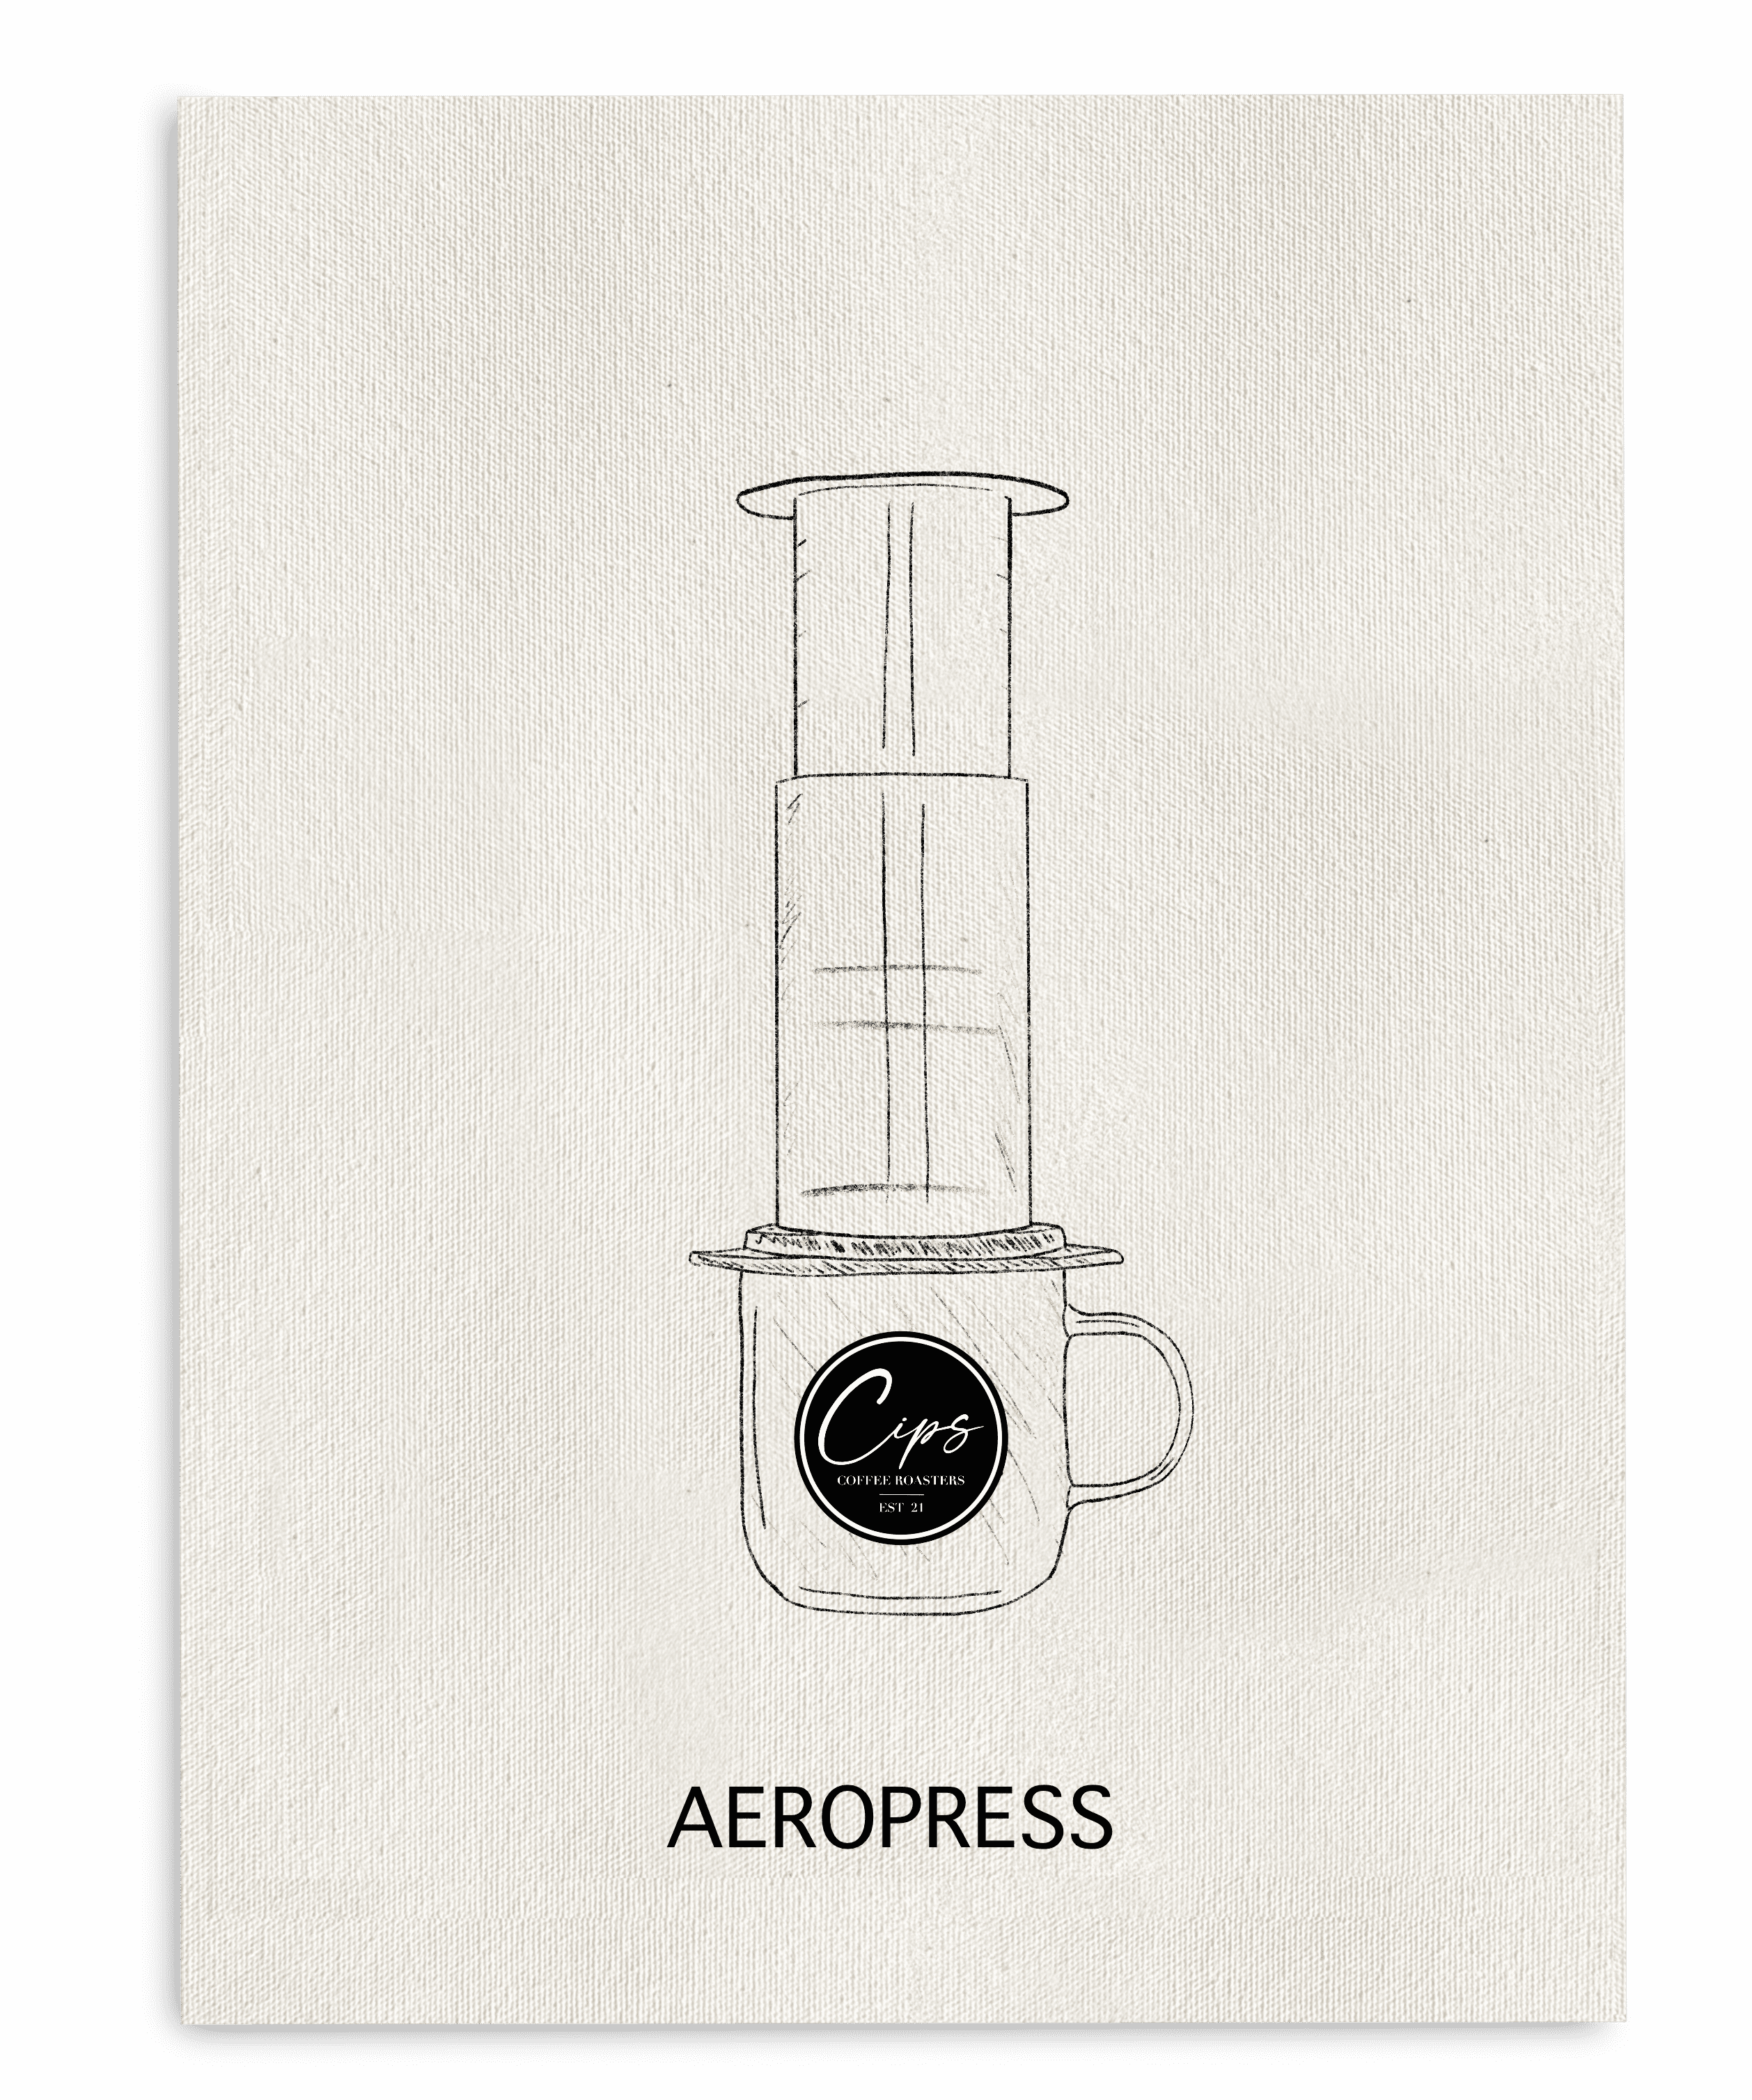 Cips Coffee Roasters Coffee Club Brew Tips for Aeropress